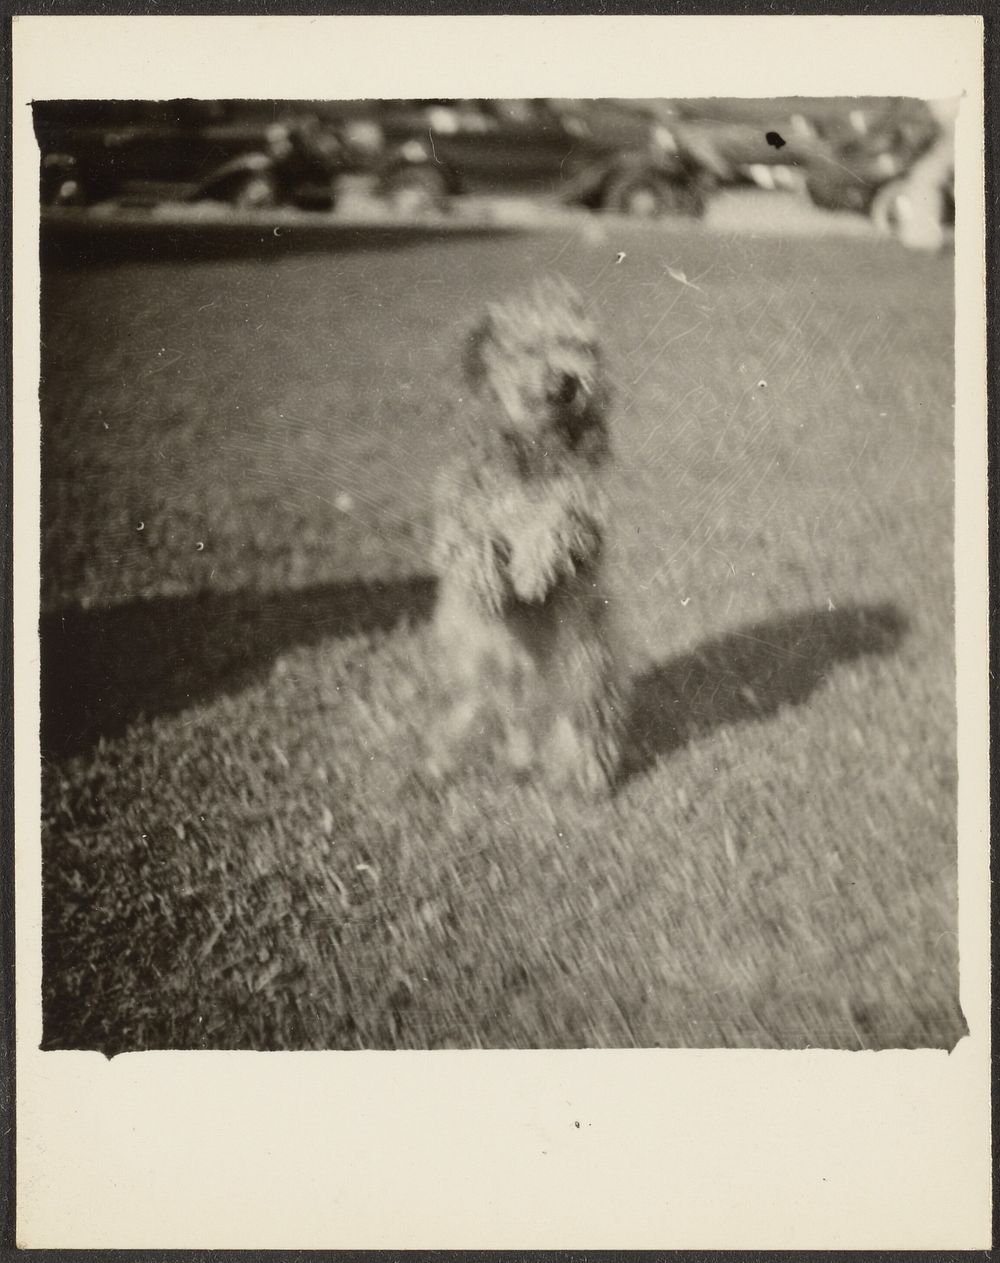 Dog on Lawn by Louis Fleckenstein